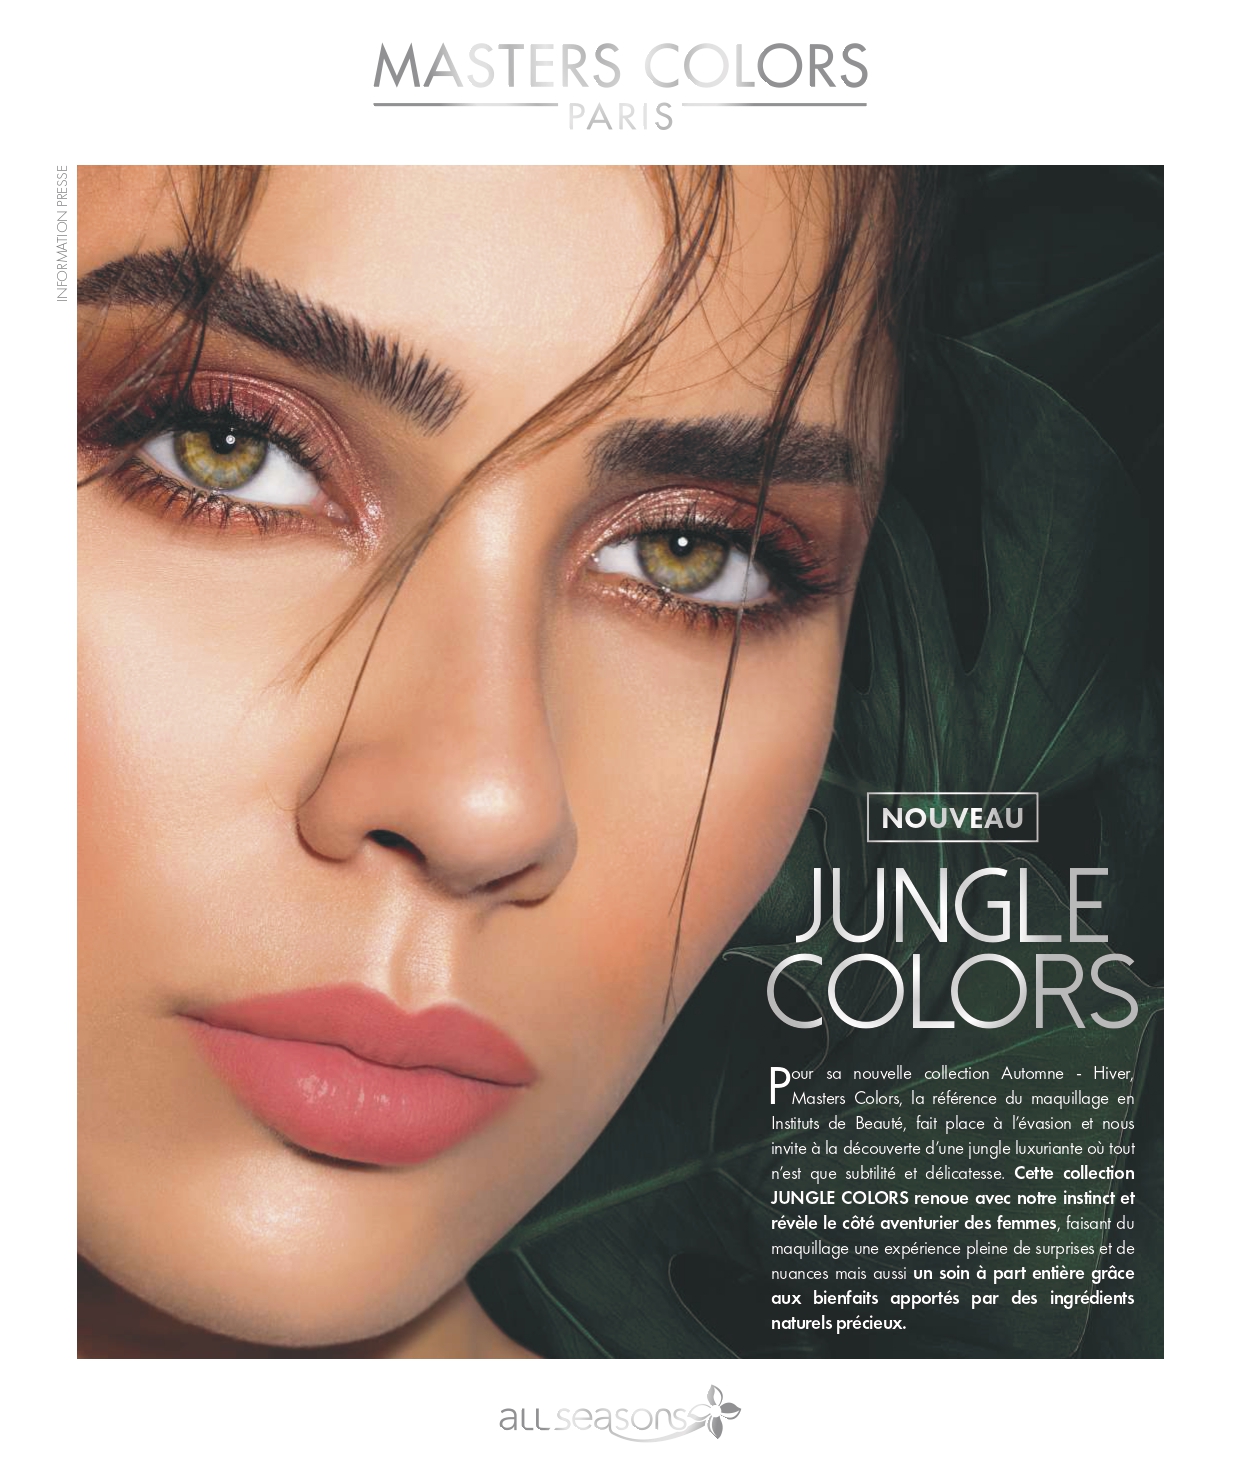 Masters Colors | Jungle Colors